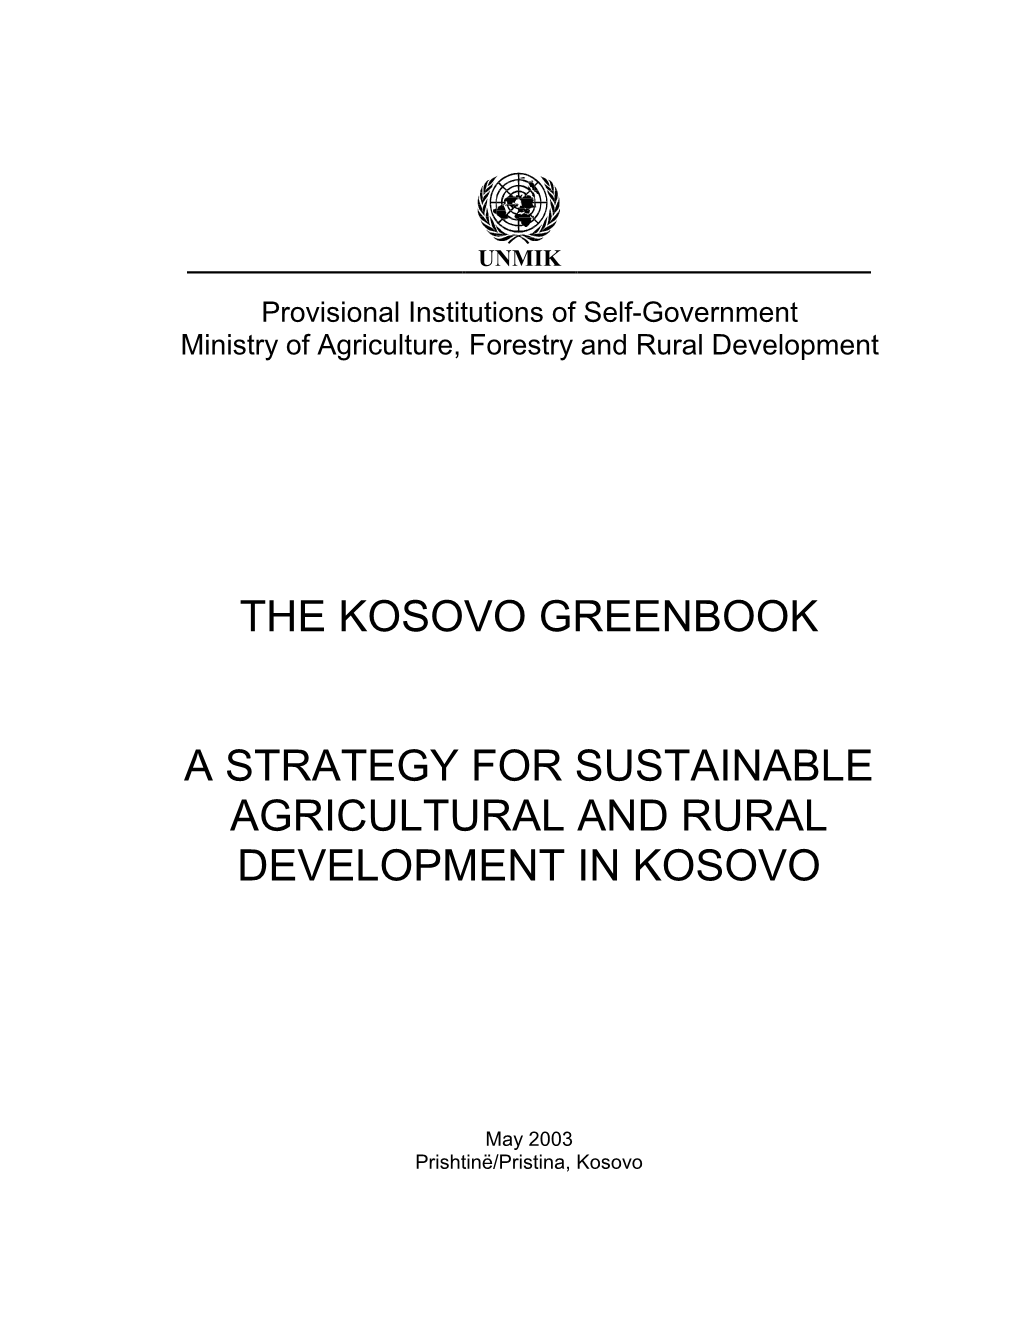 The Kosovo Greenbook